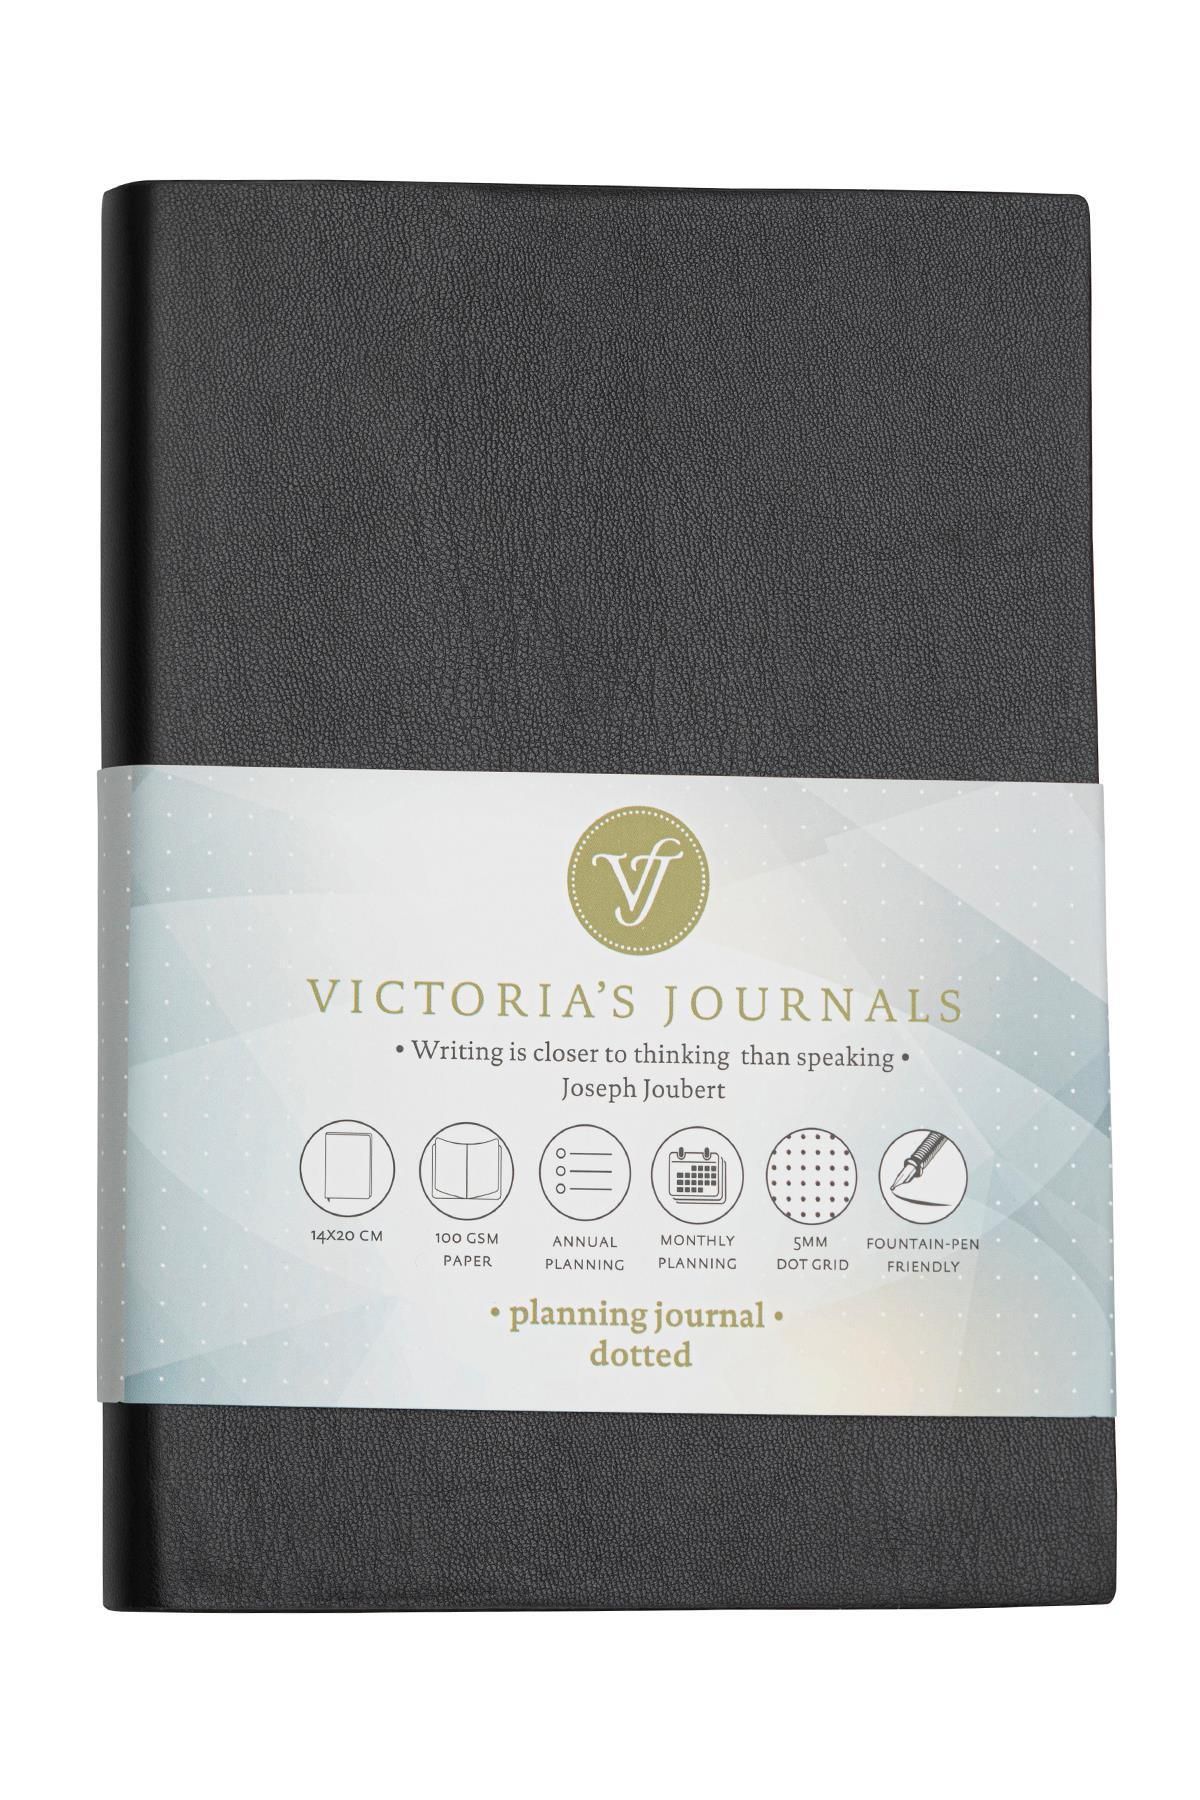 Victoria's Journals Smyth Pastel Tarihsiz Kalın Yapraklı Noktalı Defter 15x21 cm (A5) Siyah